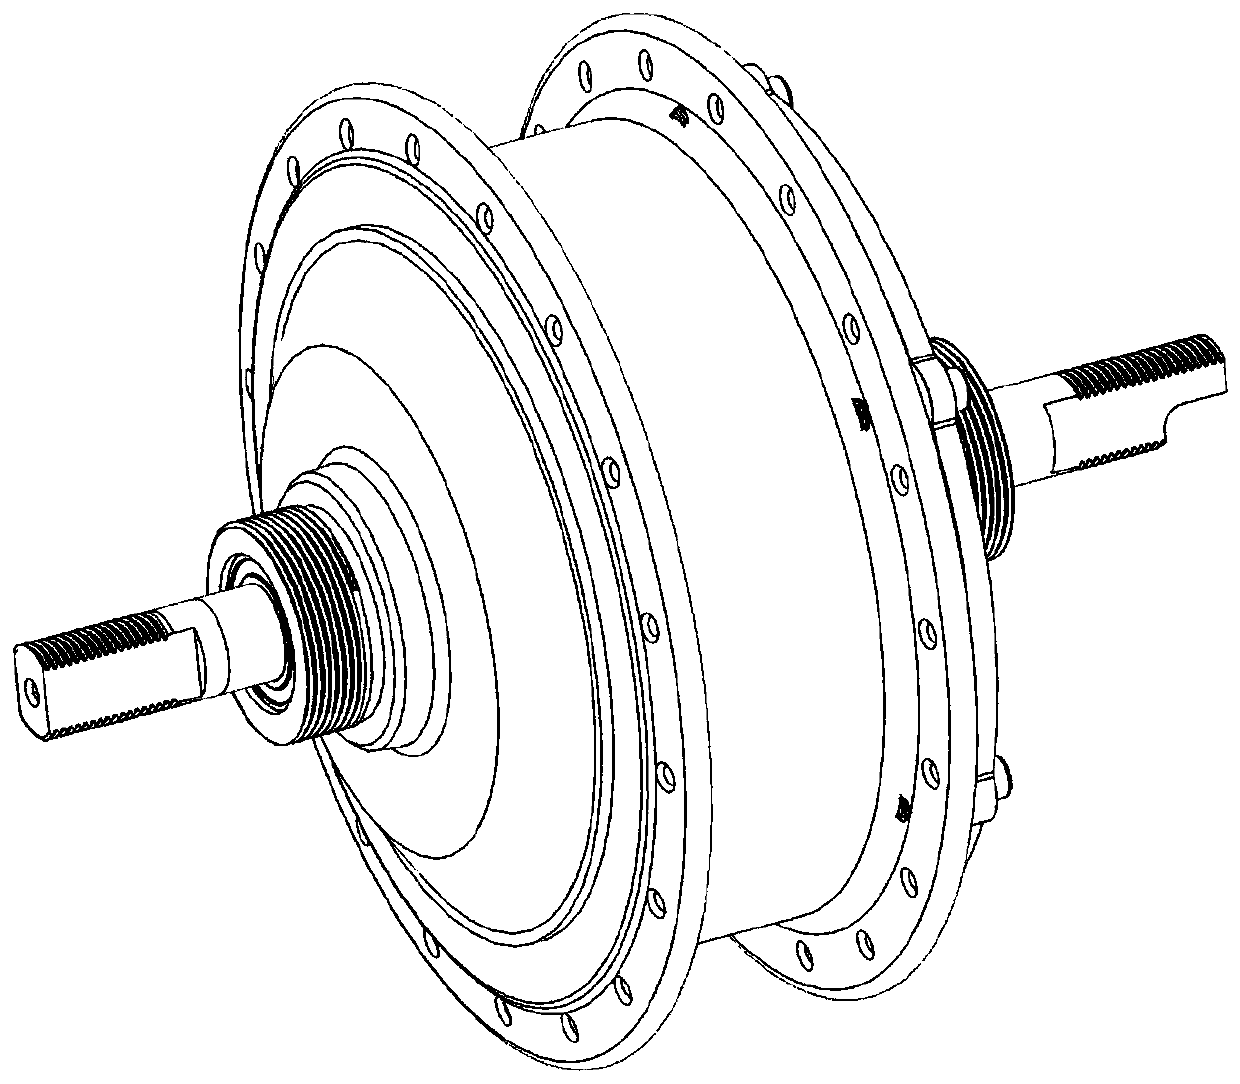 Geared hub motor of electric bicycle